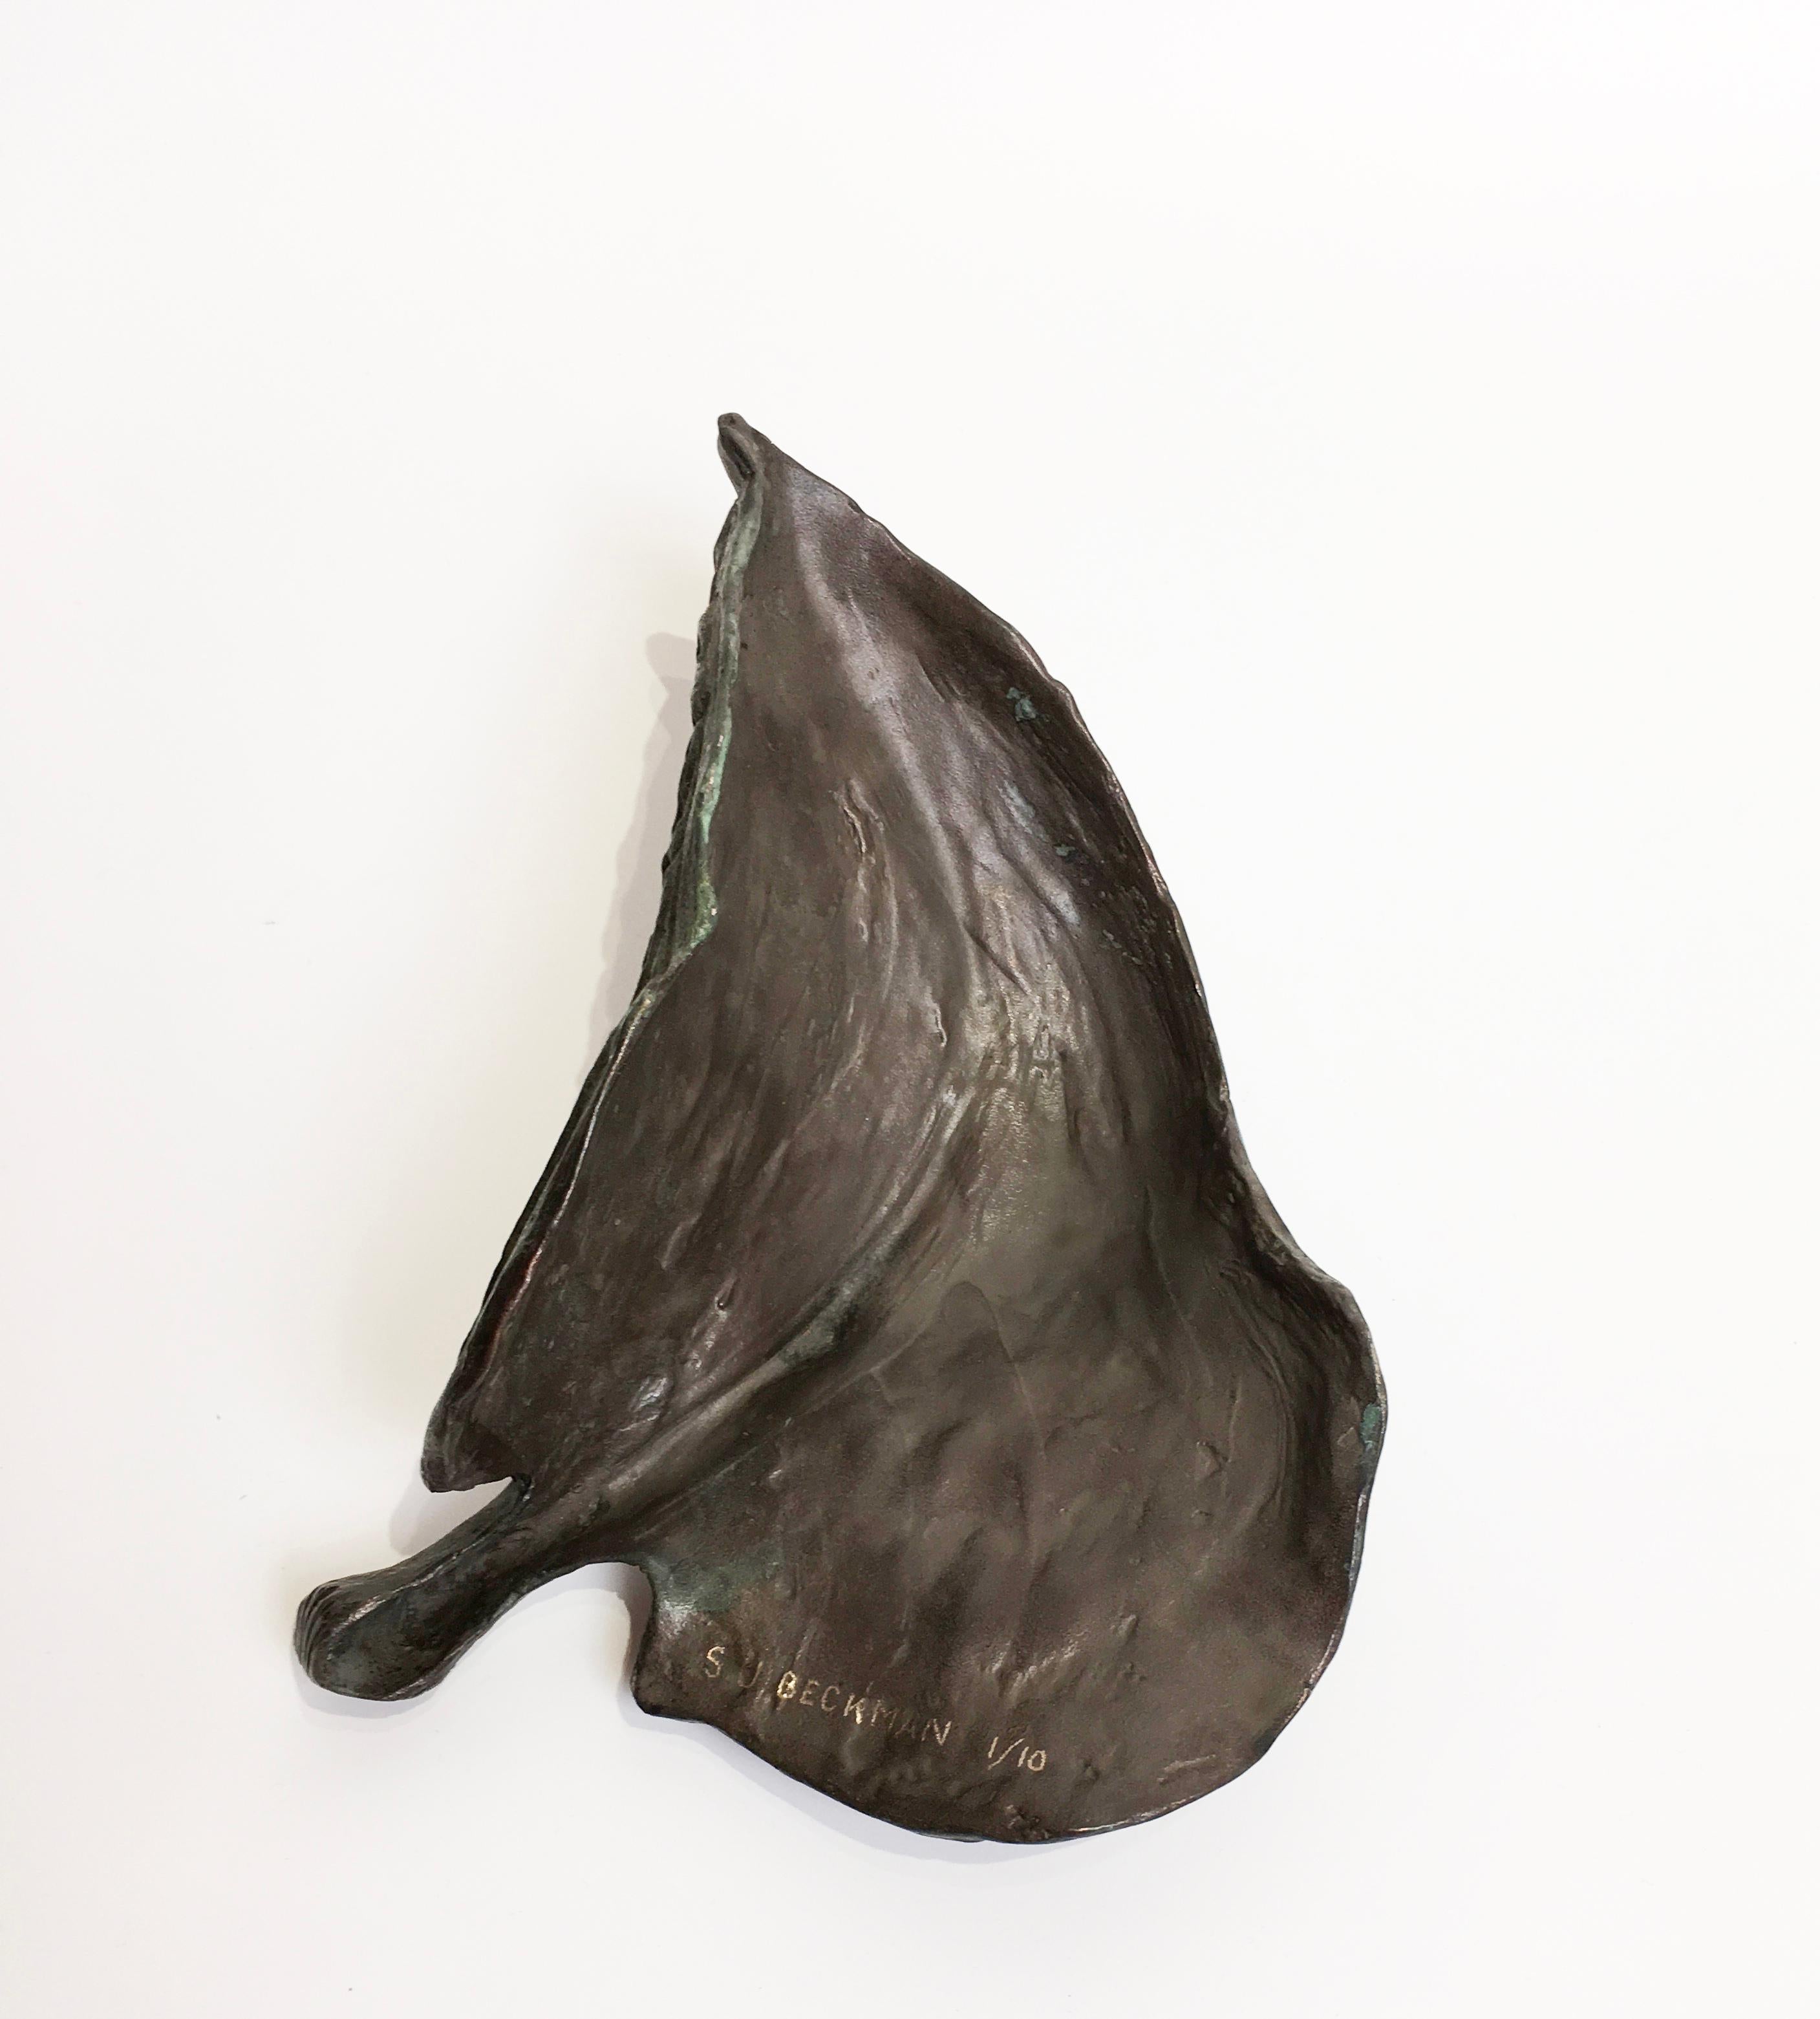 Contemporary Hosta Leaf, Small Scale Cast Bronze Botanical Sculpture with Subtle Patina